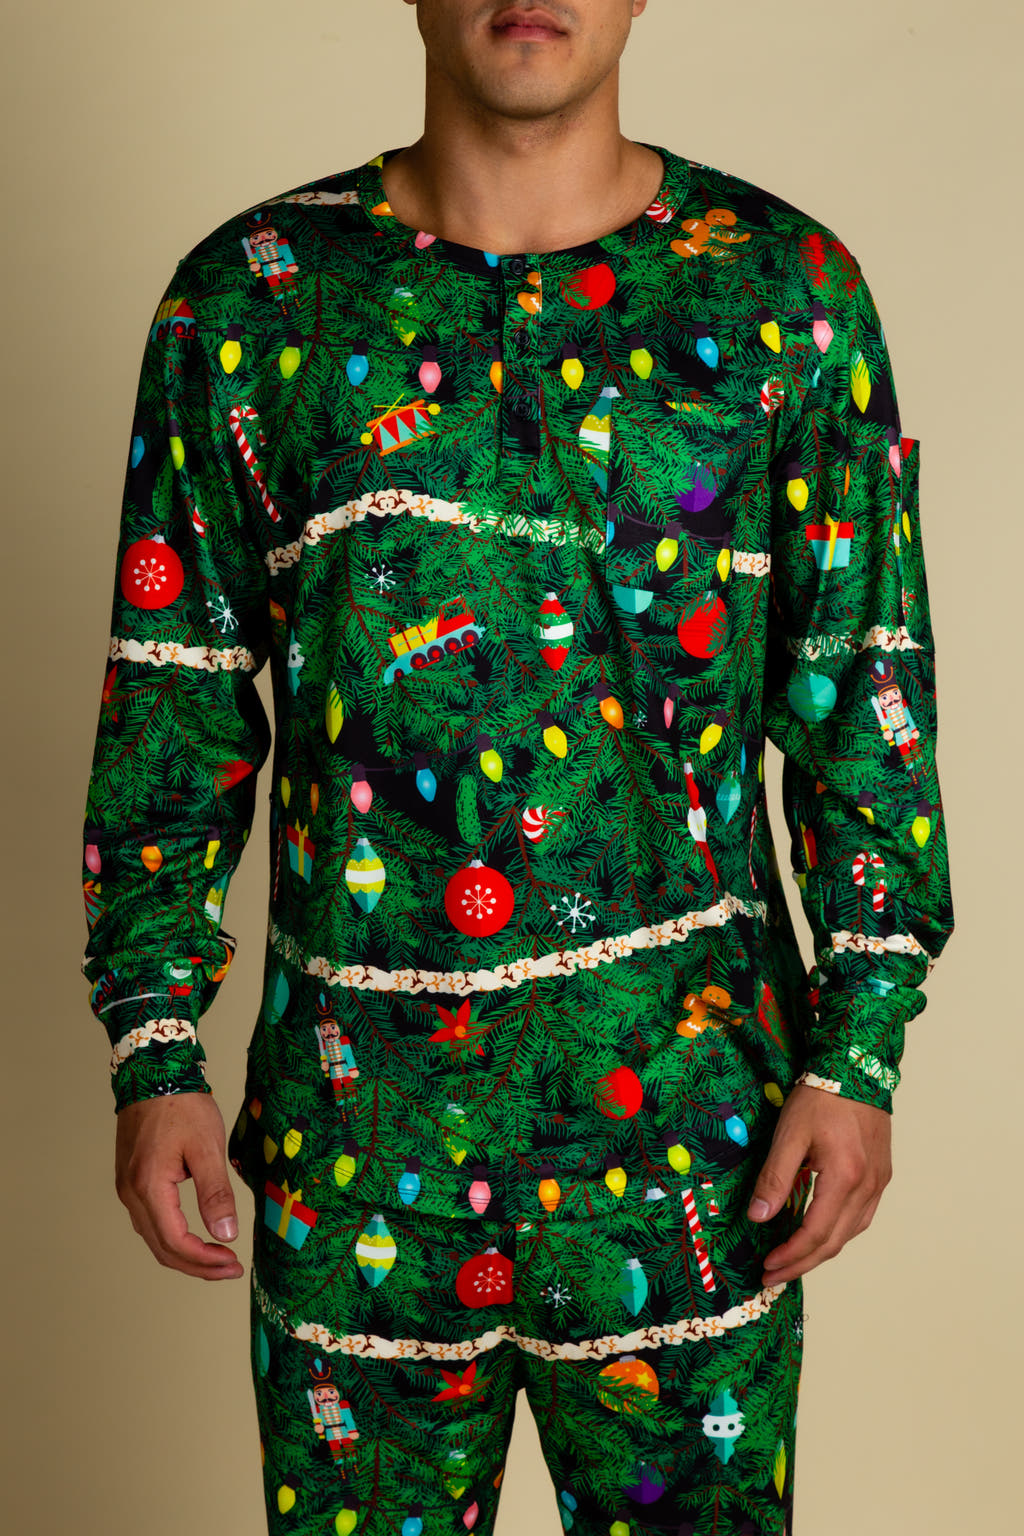 Holiday Pajamas with Christmas Decorations